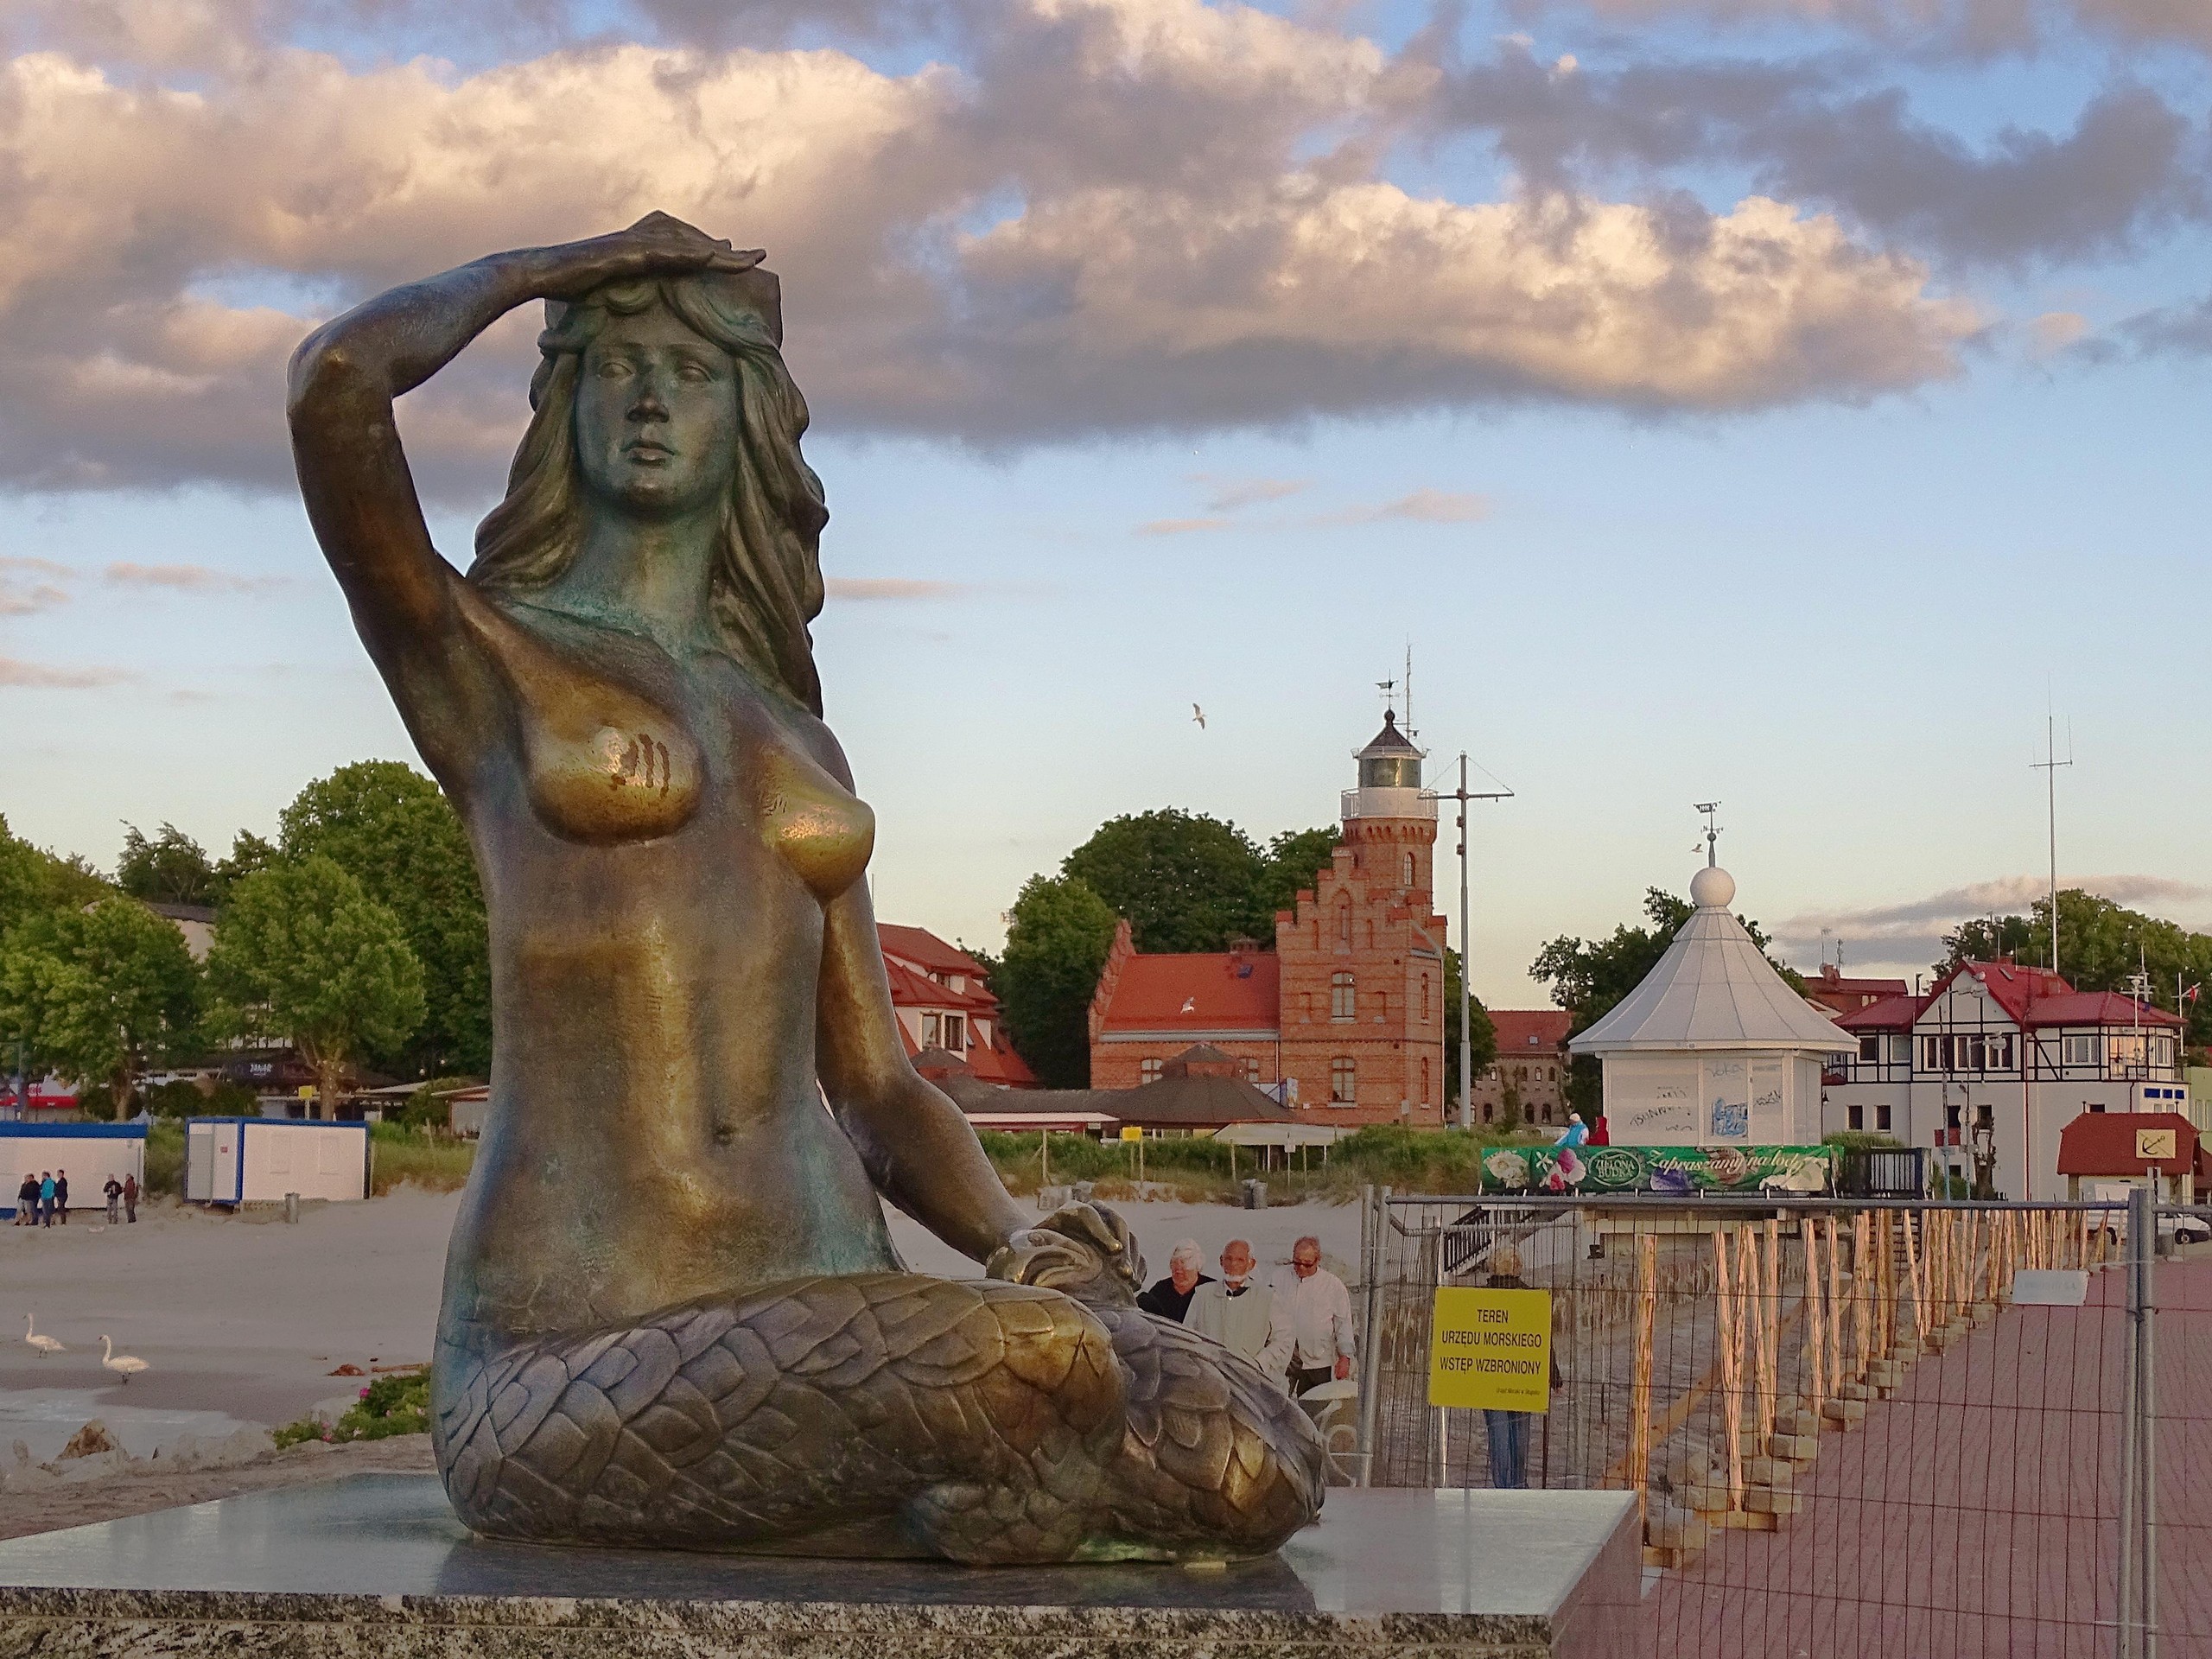 Mermaid statue in Poland